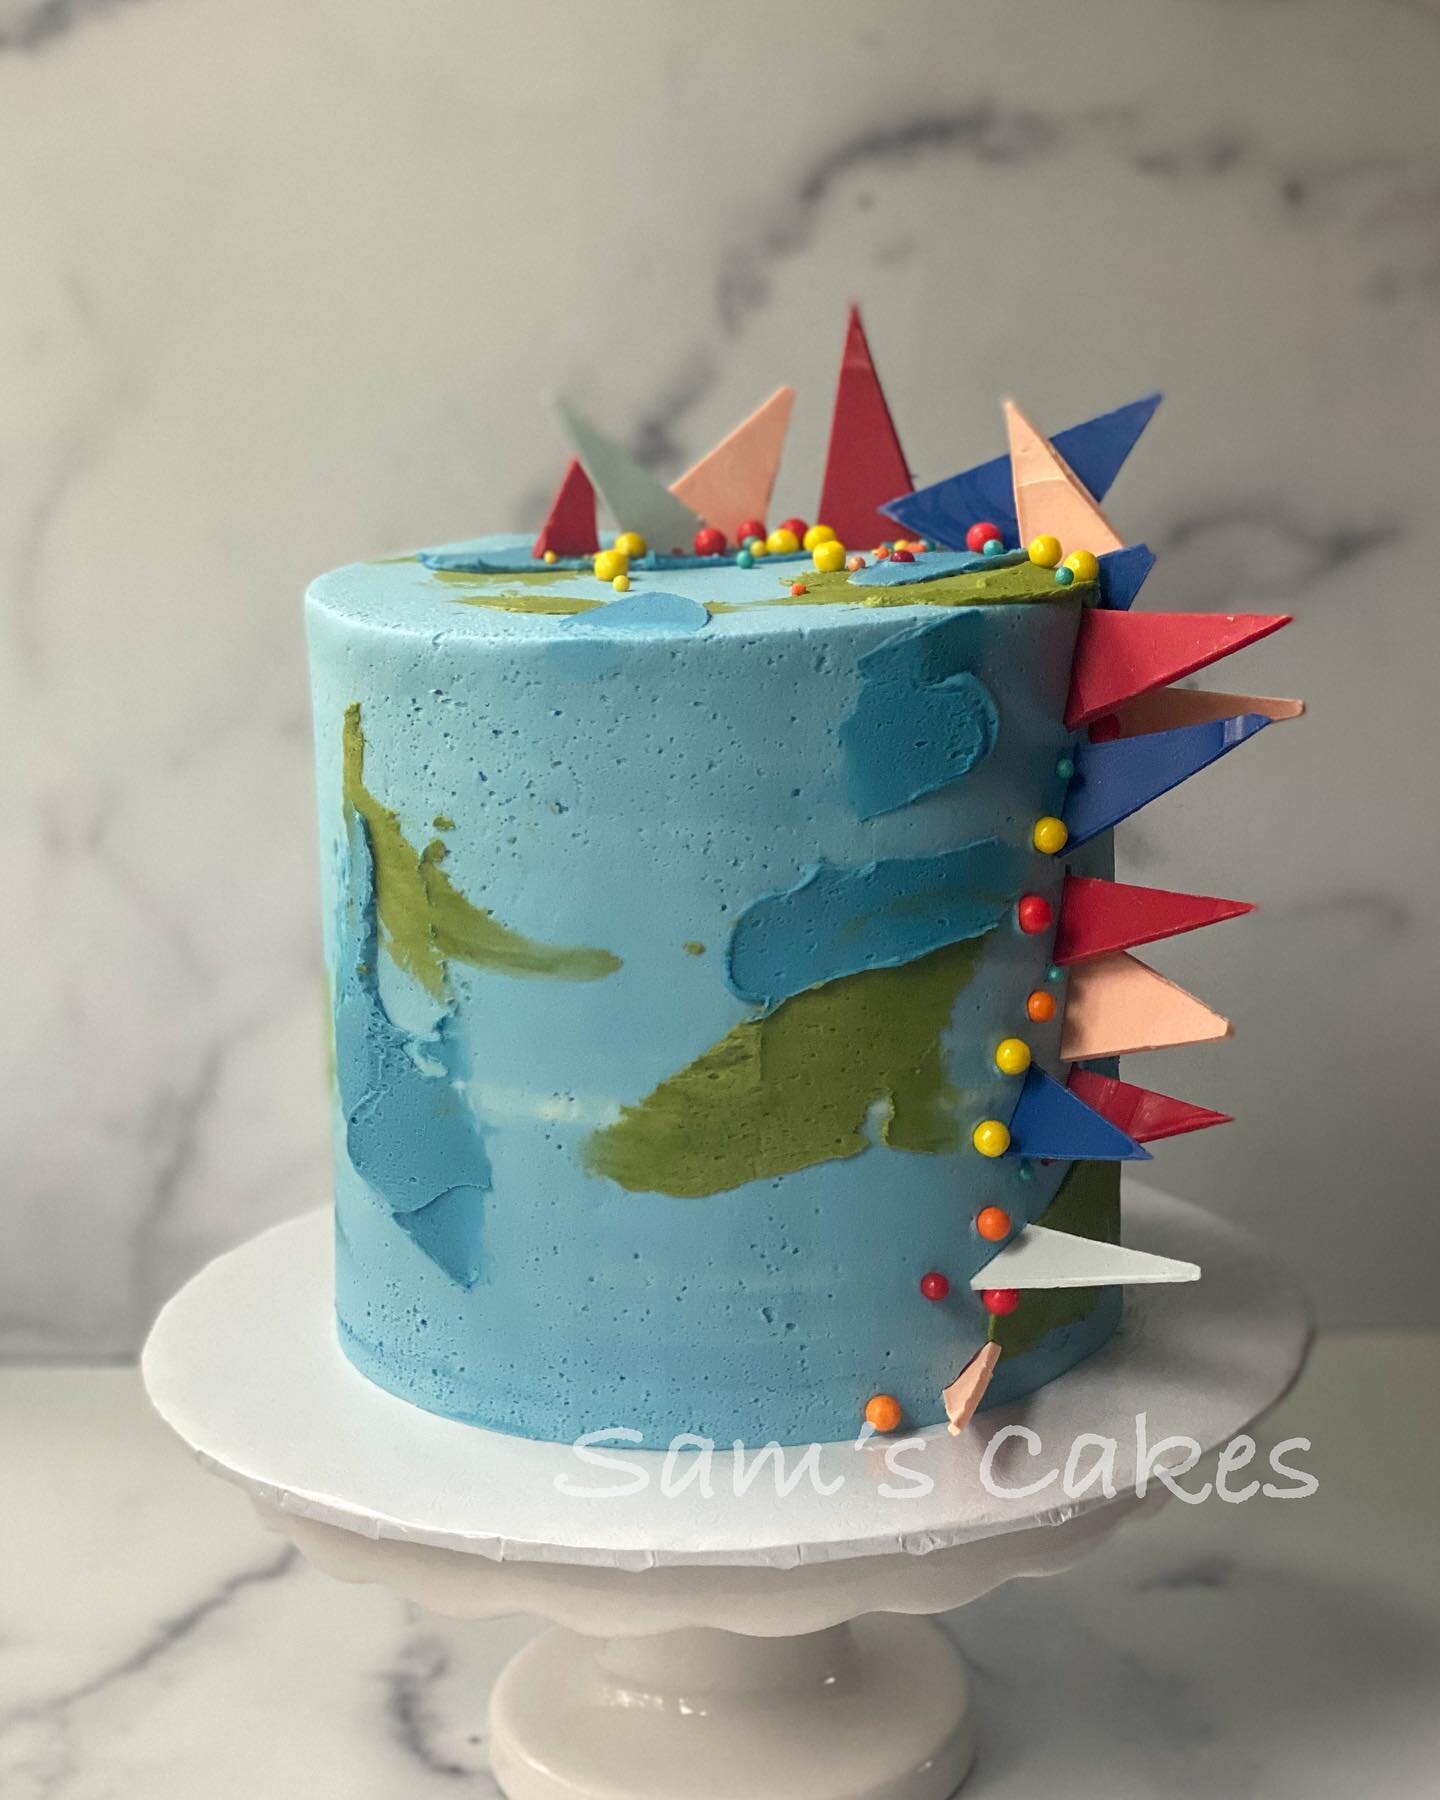 A fun dino themed cake from last month🦕🦖
.
.
Vanilla cake w/ chocolate buttercream filling, vanilla buttercream iced
.
.
Cake design inspo by @cakeygnome
.
.
#samscakes  #birthday #bday #dinosaur #buffalo #throwback #birthday #cookies #cakes#custom